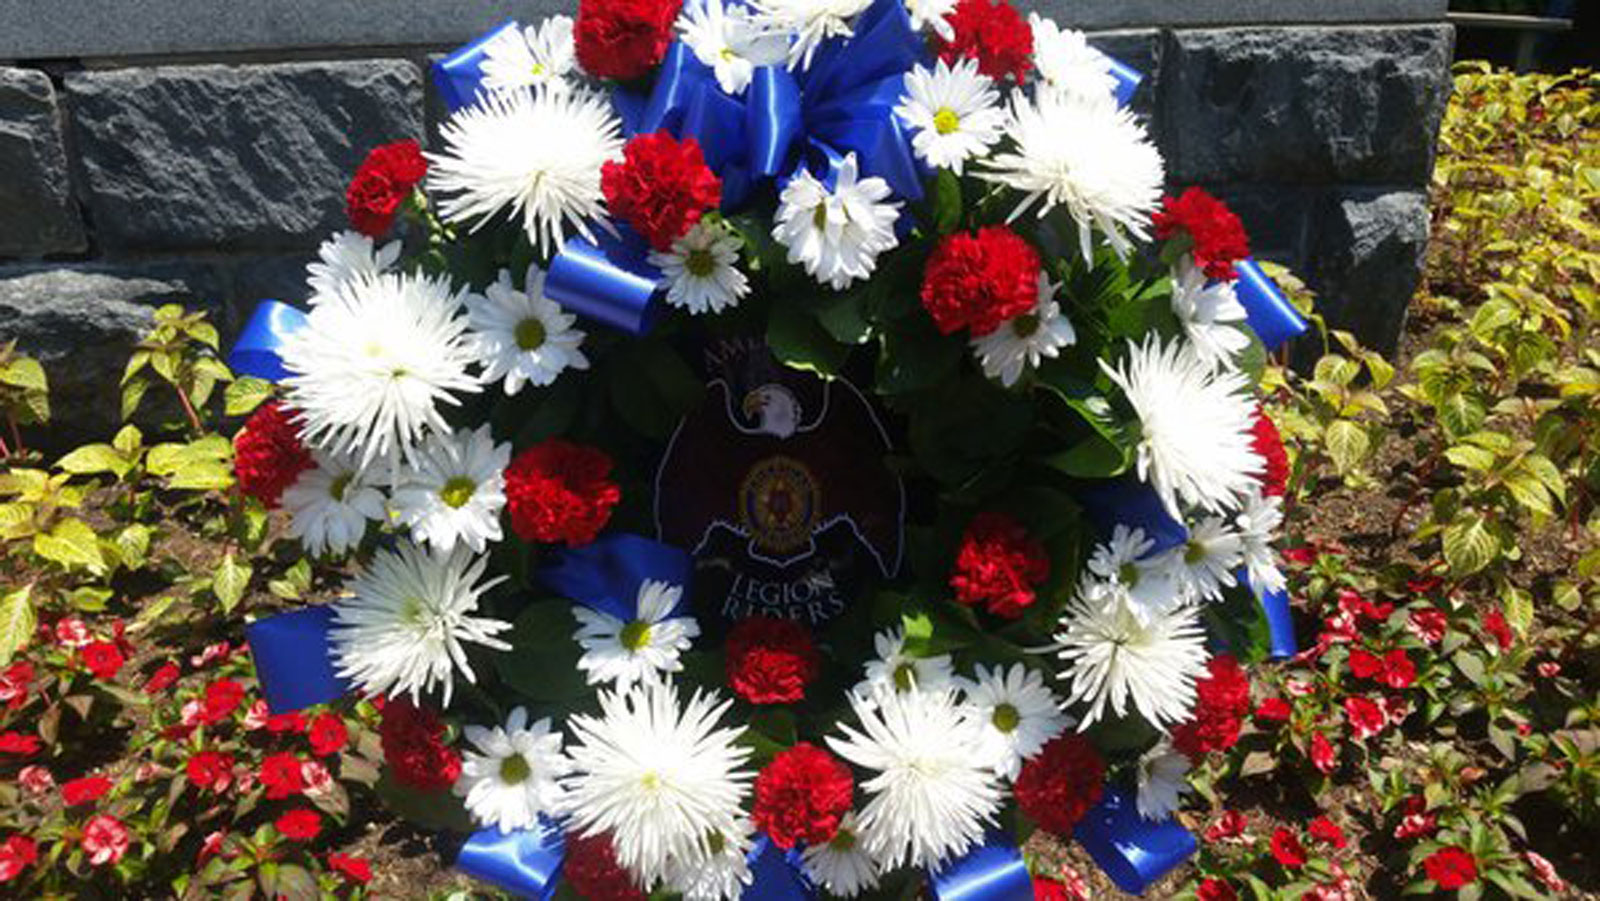 American Legion wreath for Civil War soldiers. (WTOP/Allison Keyes)